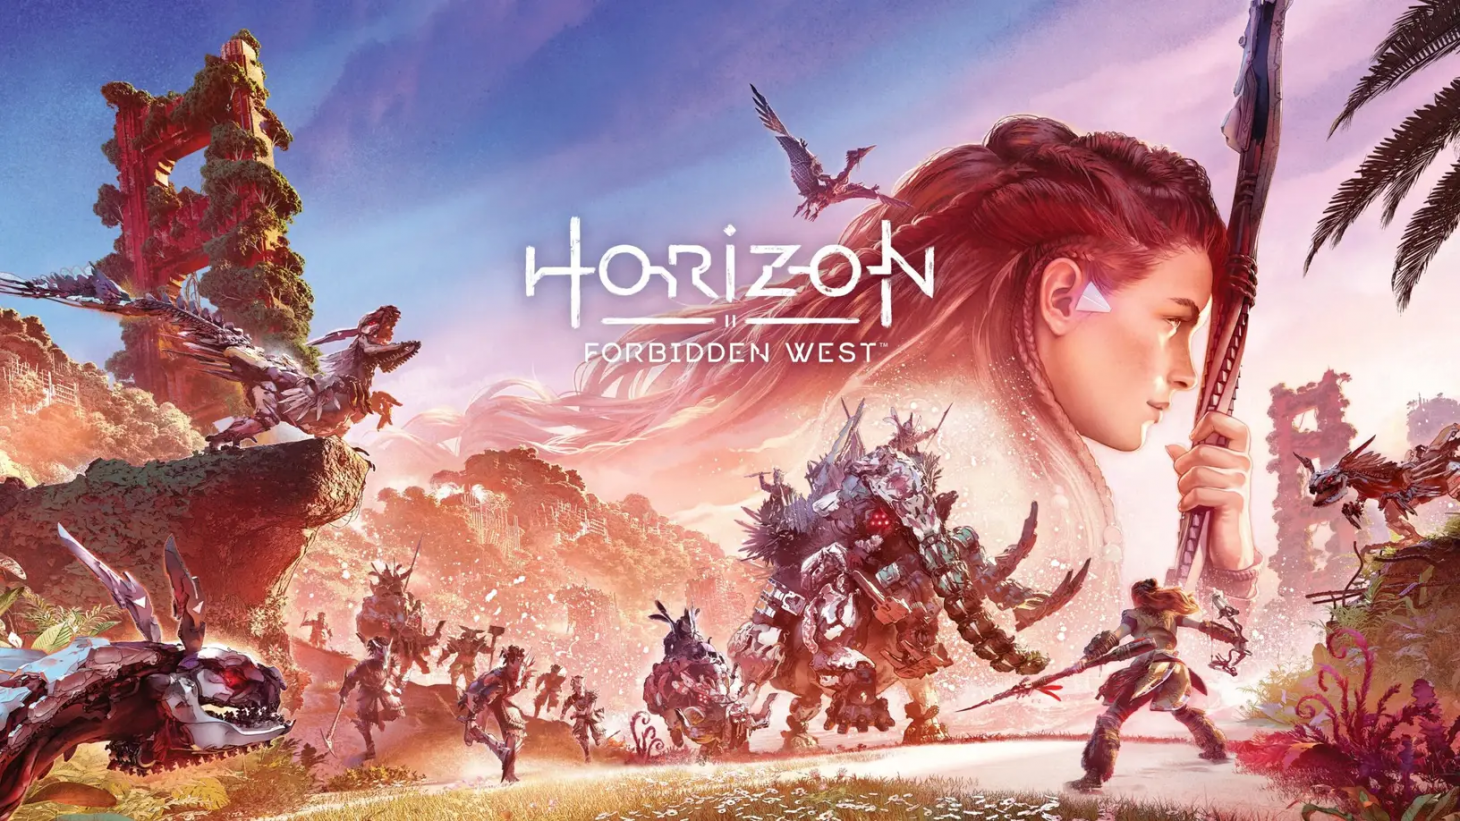 Horizon Forbidden West Burning Shores DLC pre-load is now live